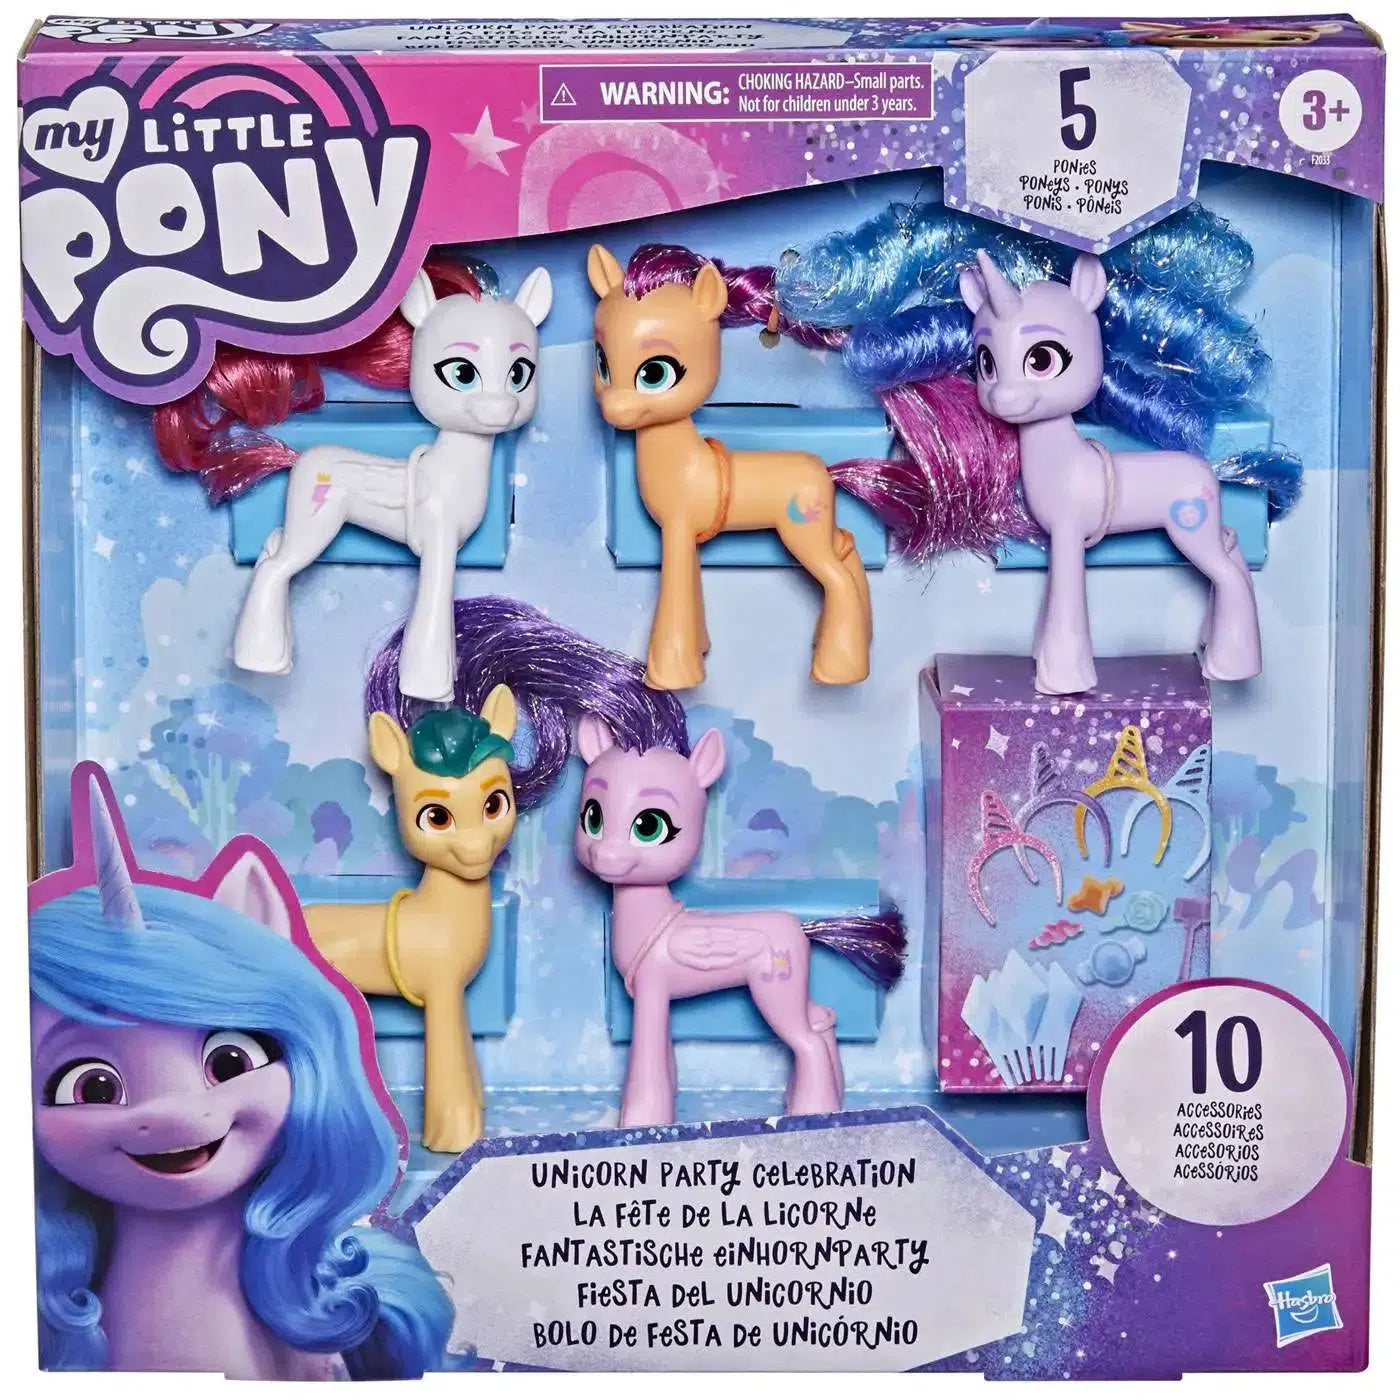 Hasbro-My Little Pony: A New Generation Movie Unicorn Party Celebration Collection-F2033-Legacy Toys